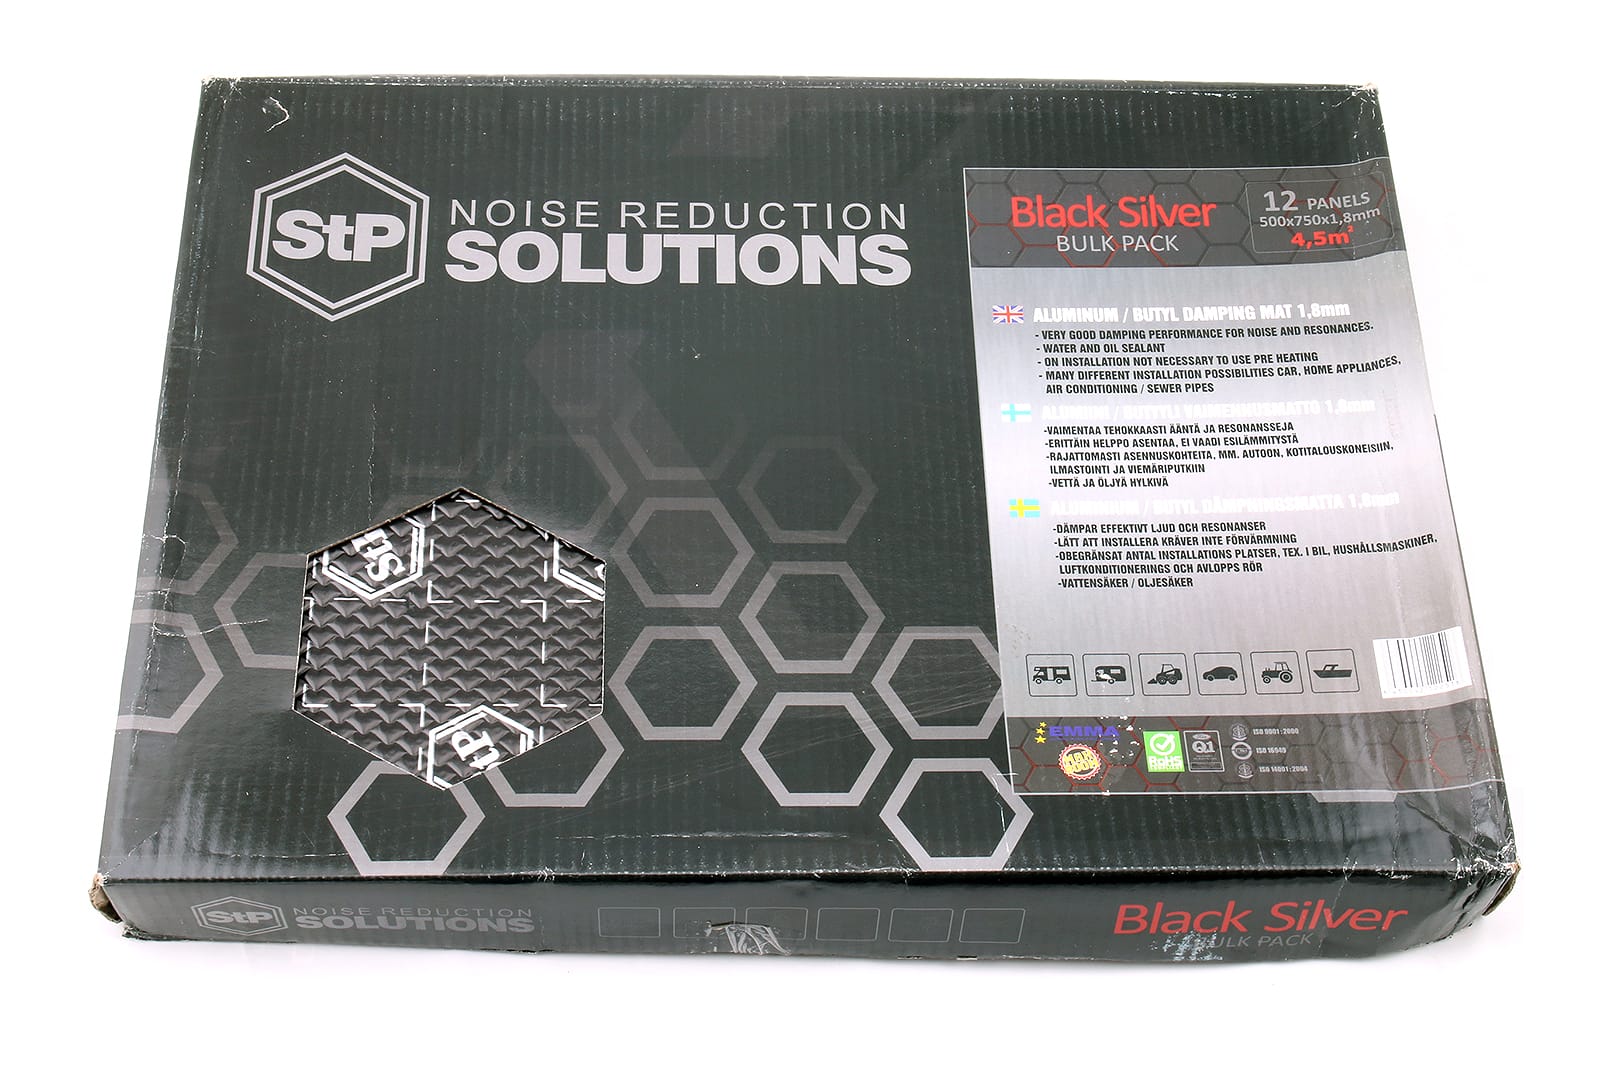 STP Black Silver Bulk Pack 4,5m²